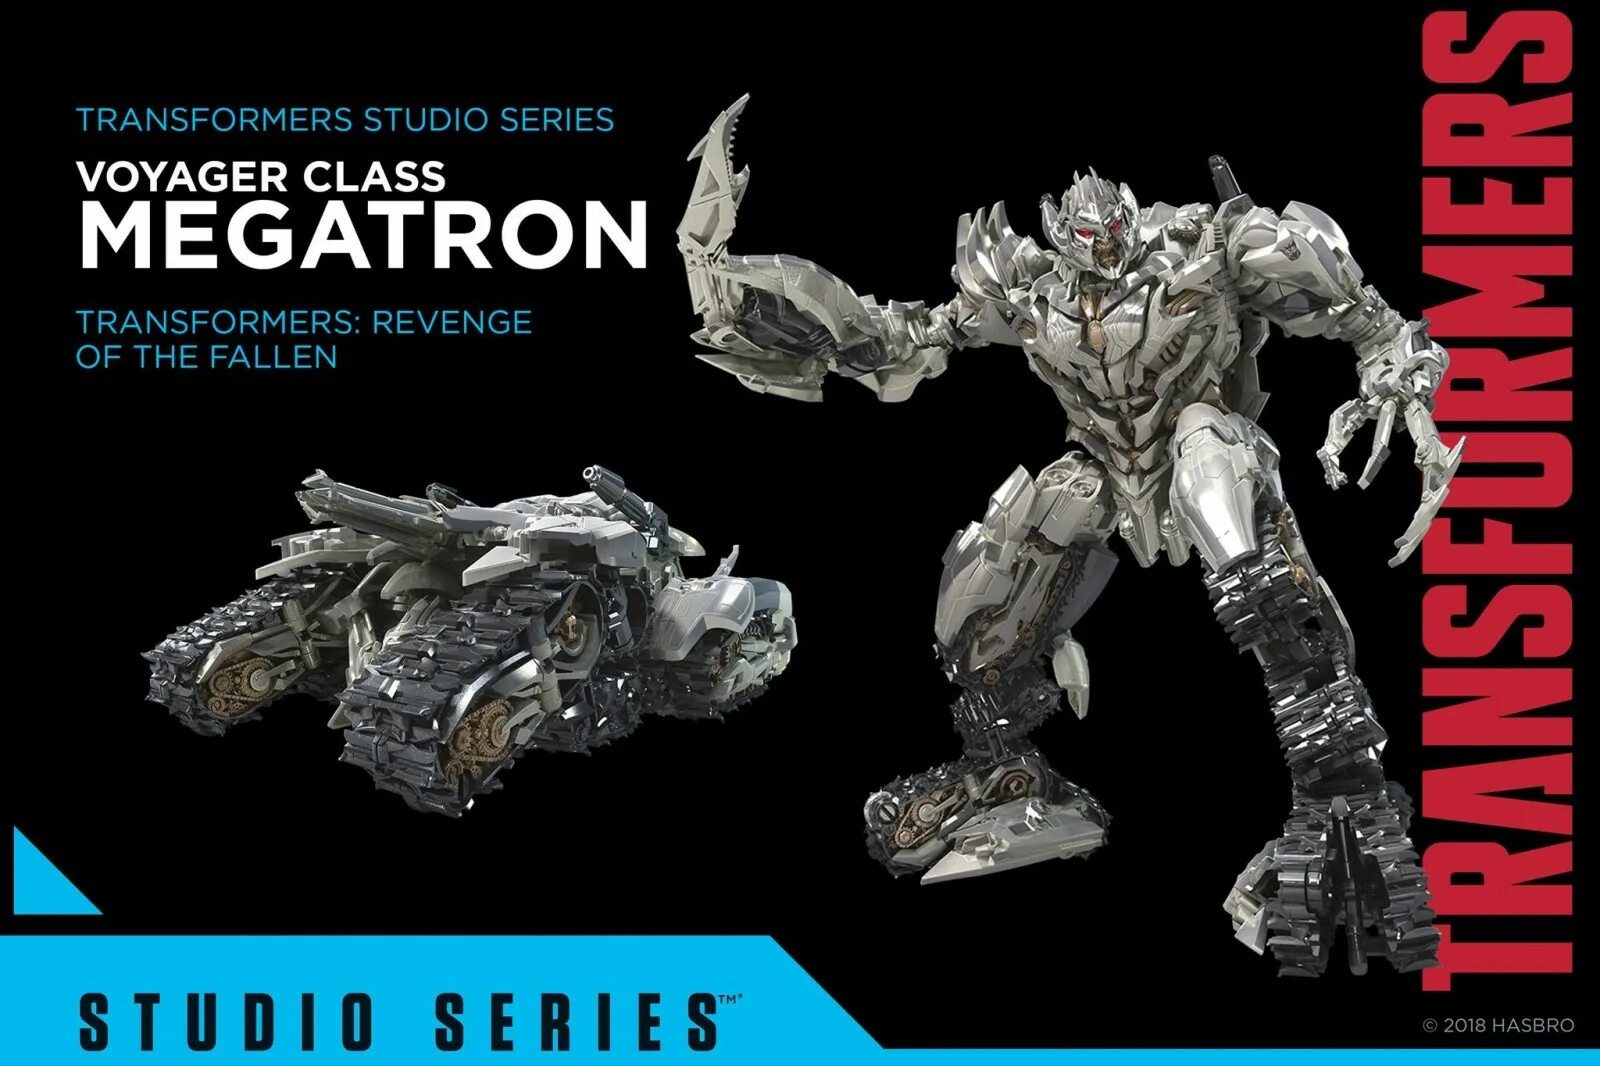 Studio series. Трансформеры студио Сериес Мегатрон. Transformers Studio Series Мегатрон. Мегатрон Studio Series 13. Игрушки трансформеры Studio Series Мегатрон.